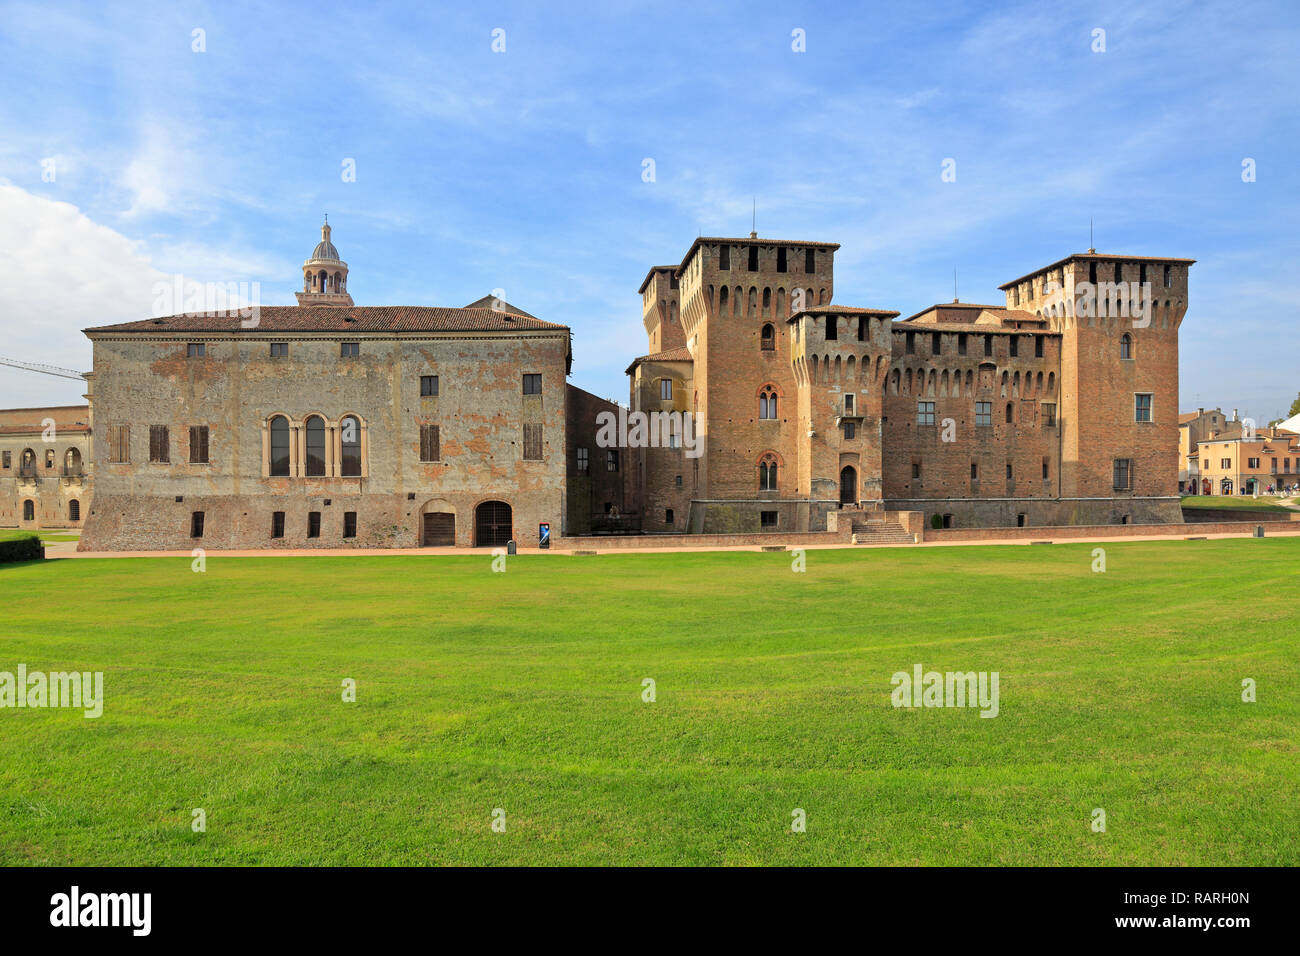 Castello di San Giorgio, Mantoue, UNESCO World Heritage Site, Lombardie, Italie. Banque D'Images